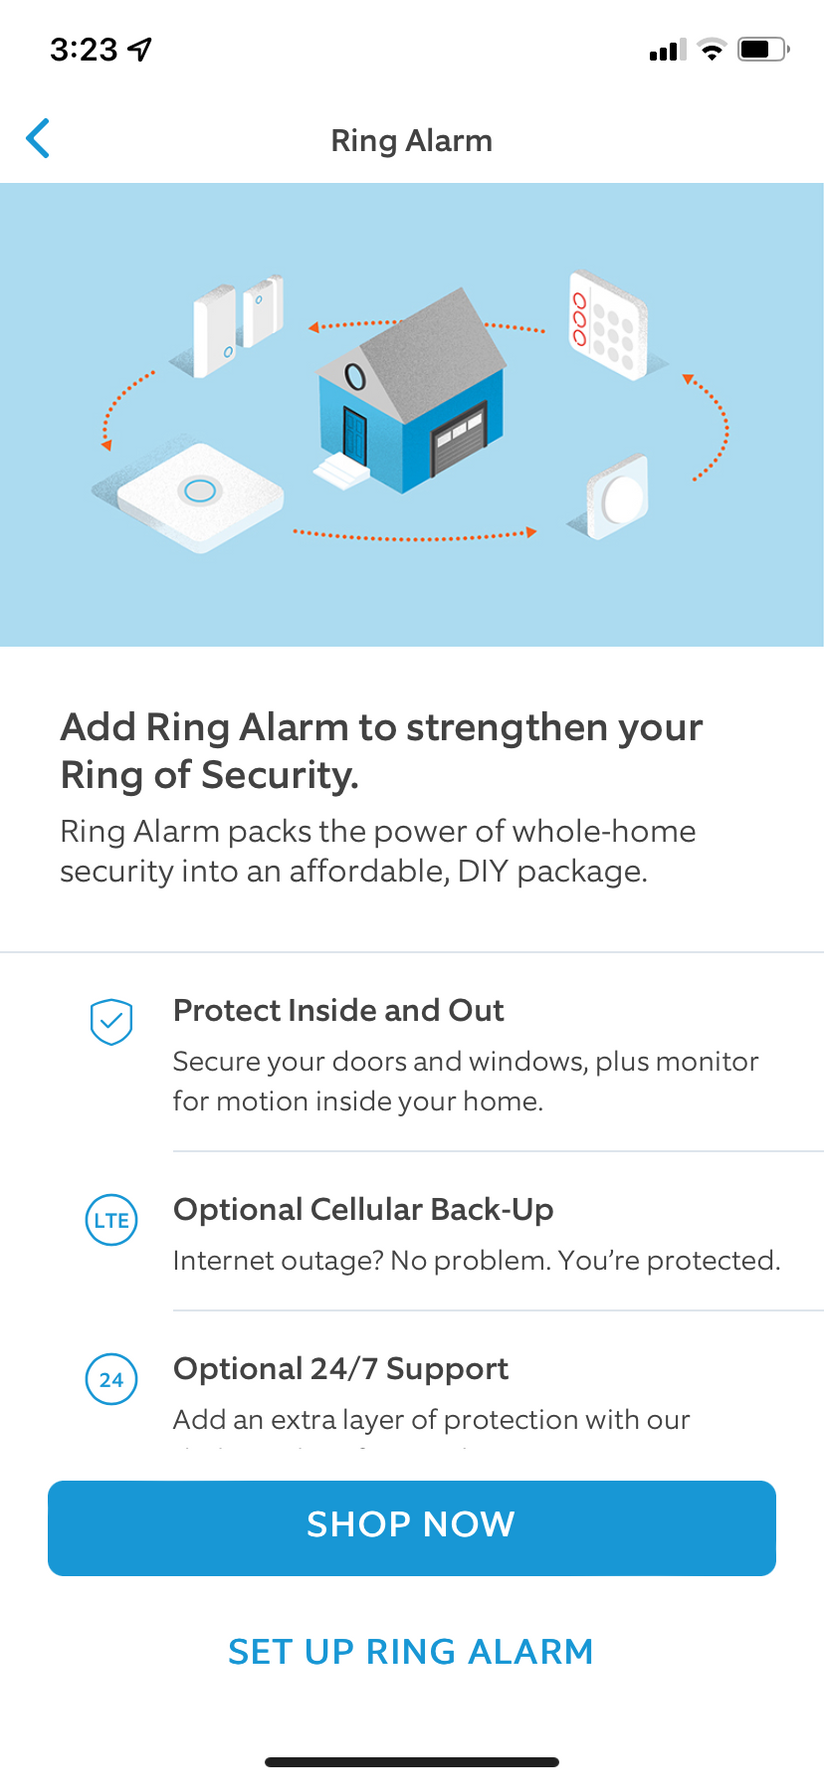 Ring Alarm Pro 8 Piece Security Kit